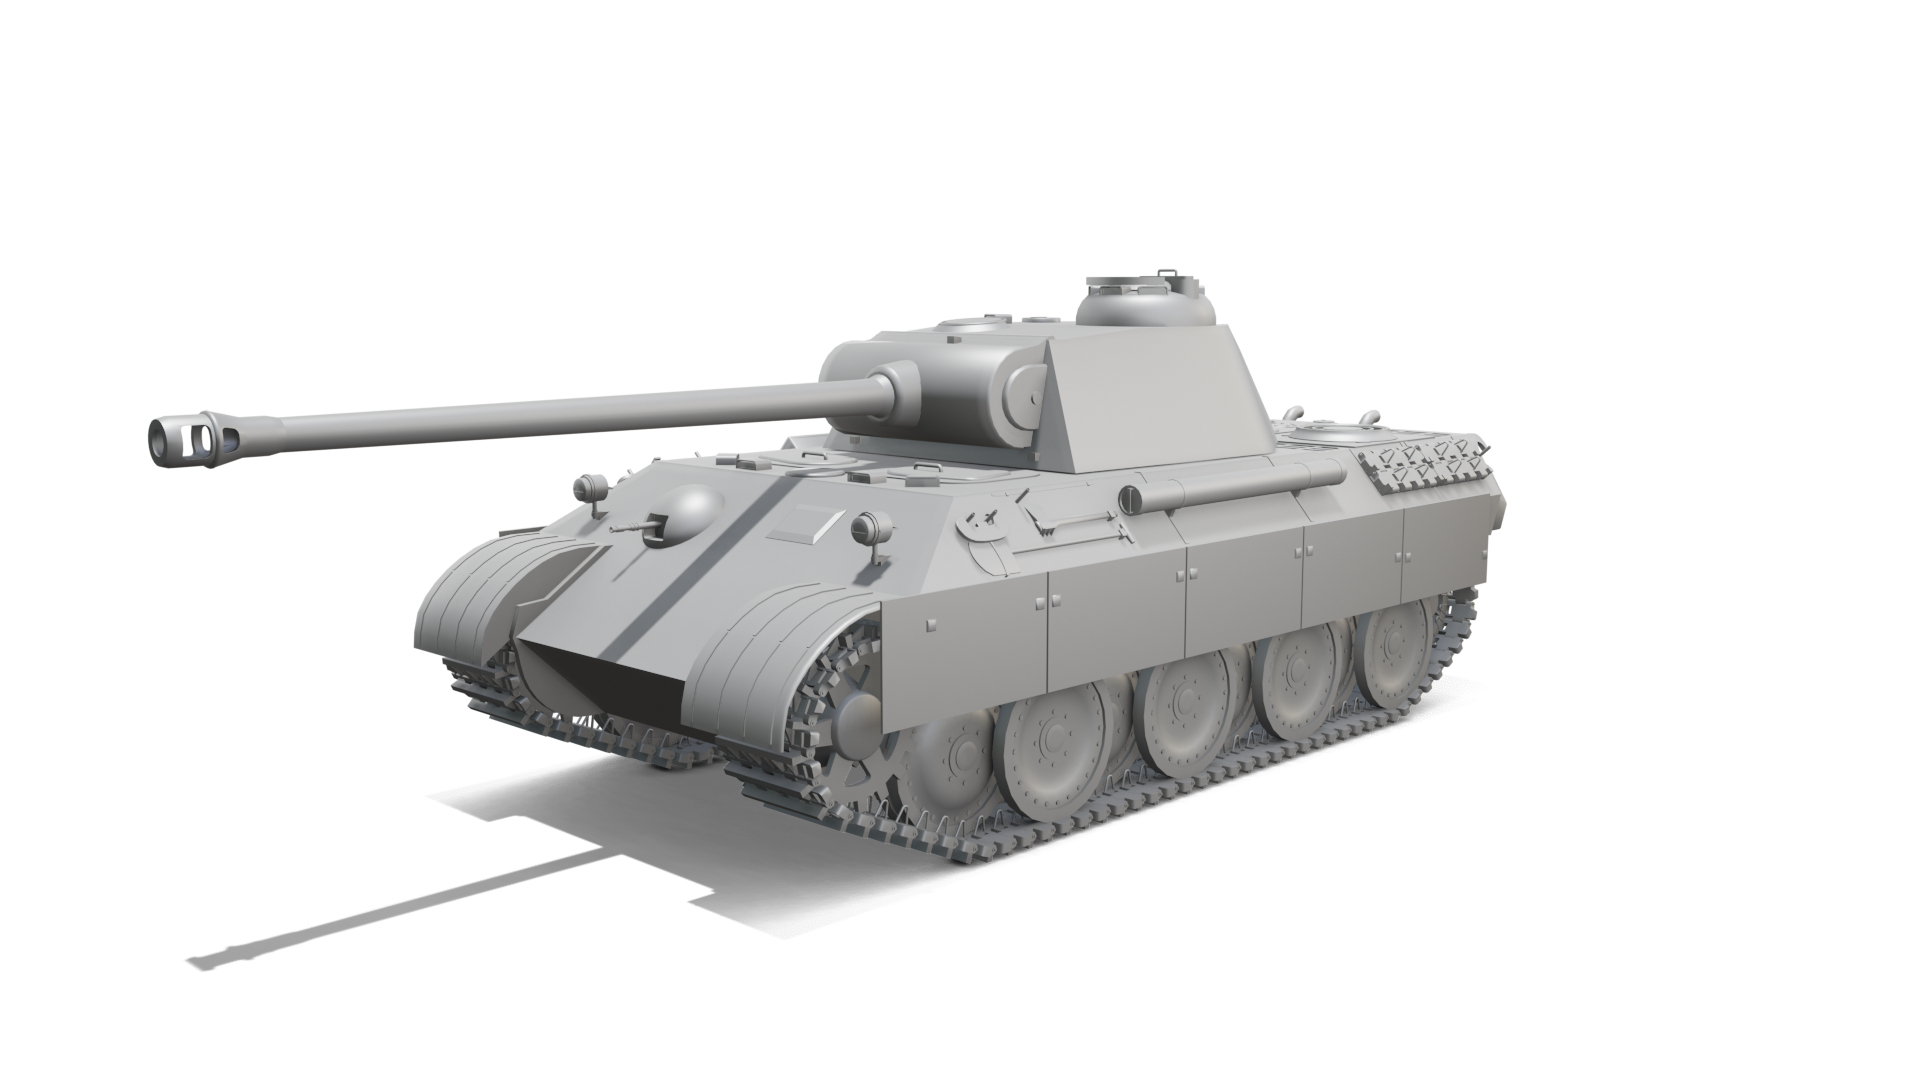 HD wallpaper: Tanks, Black & White, Military, Panther, Vehicle